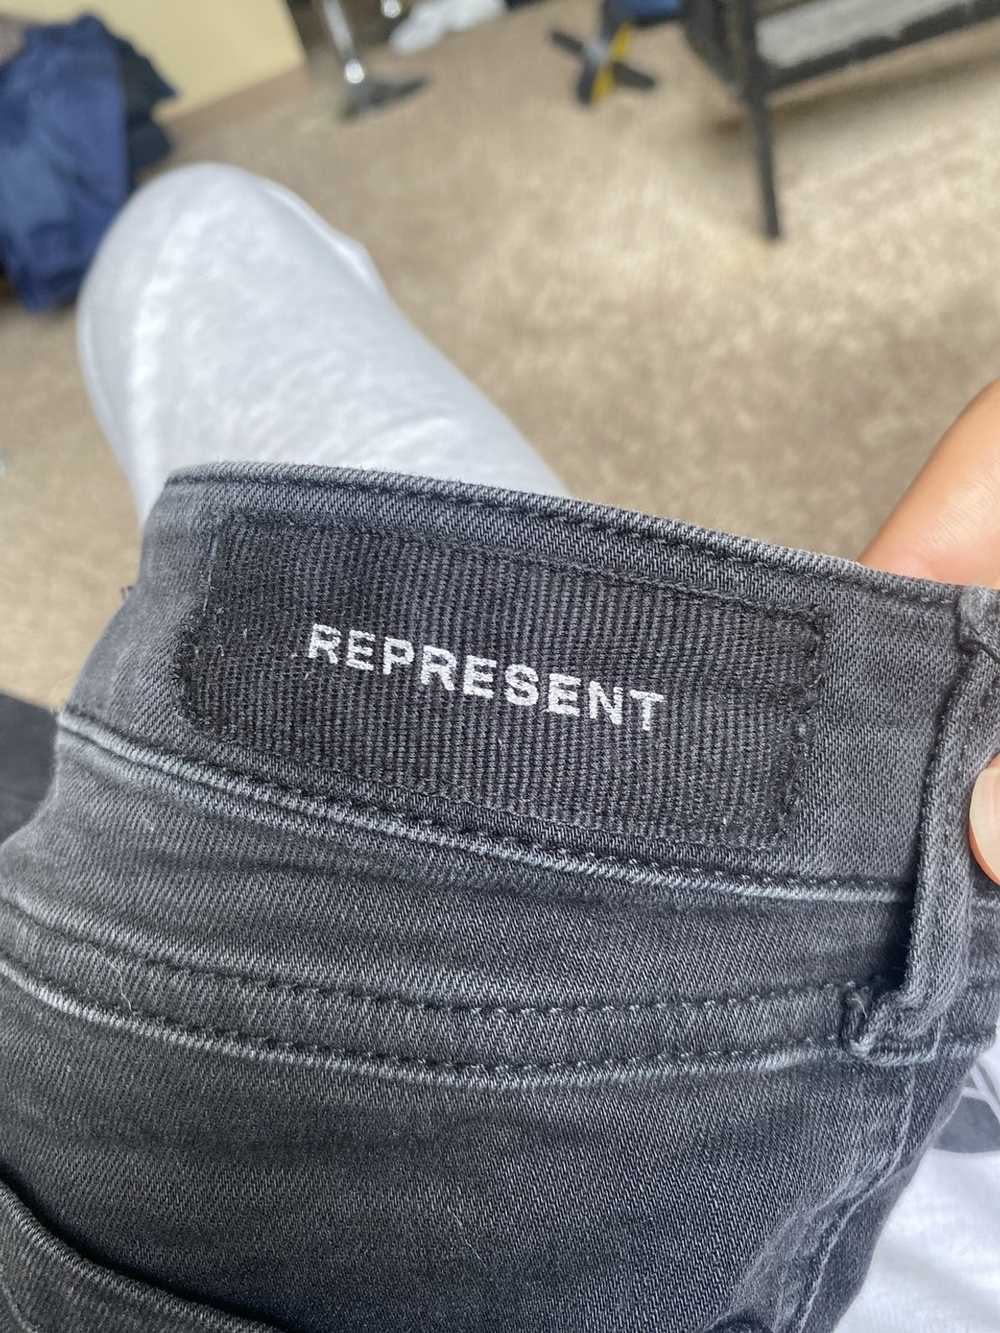 Represent Clo. Represent jeans - image 3